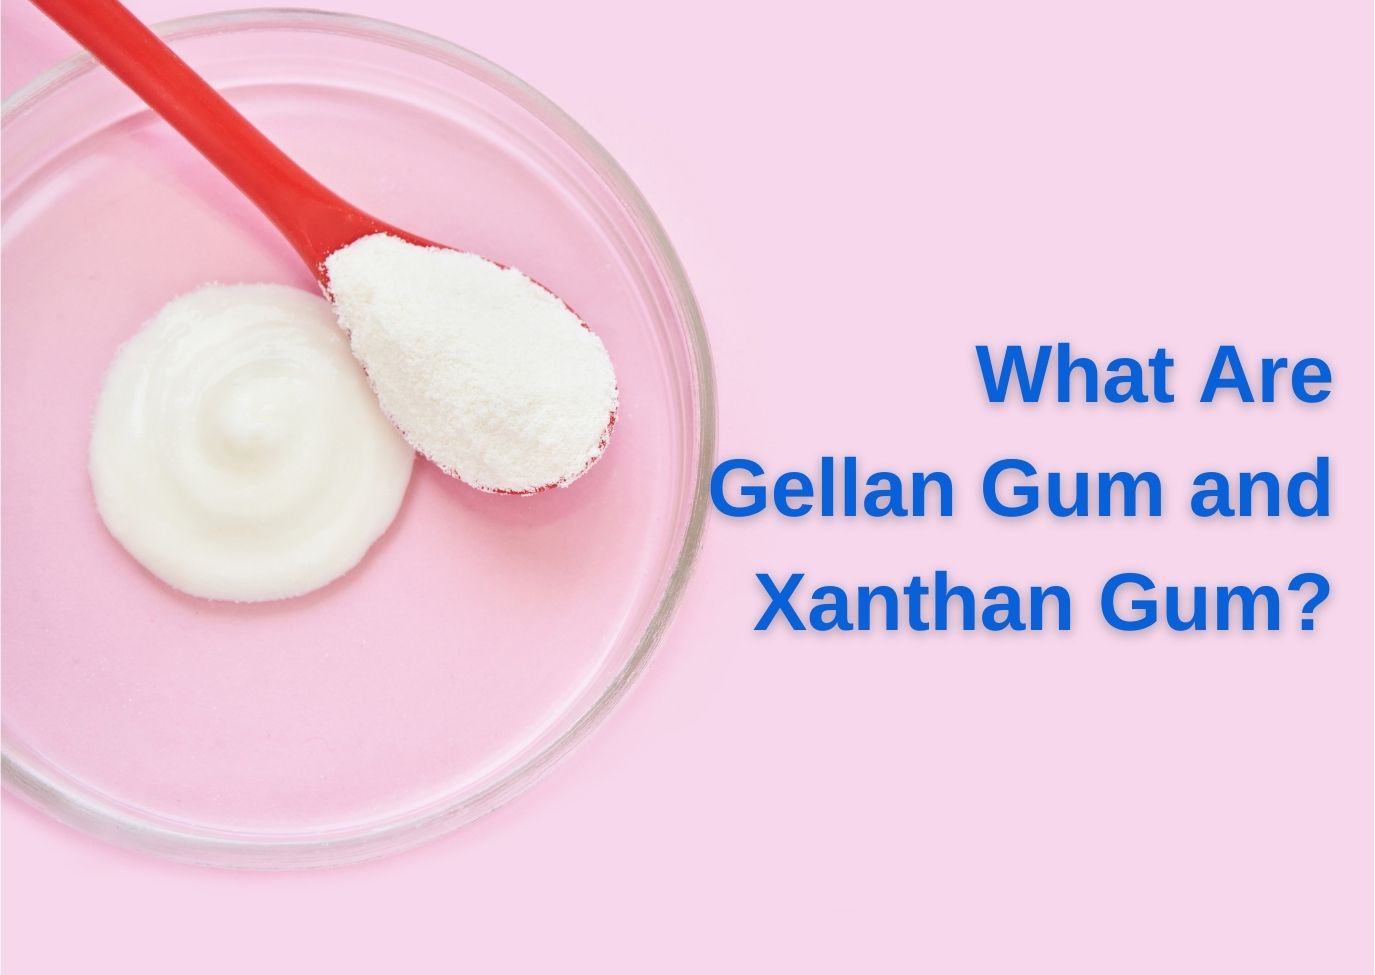 What Are Gellan Gum and Xanthan Gum